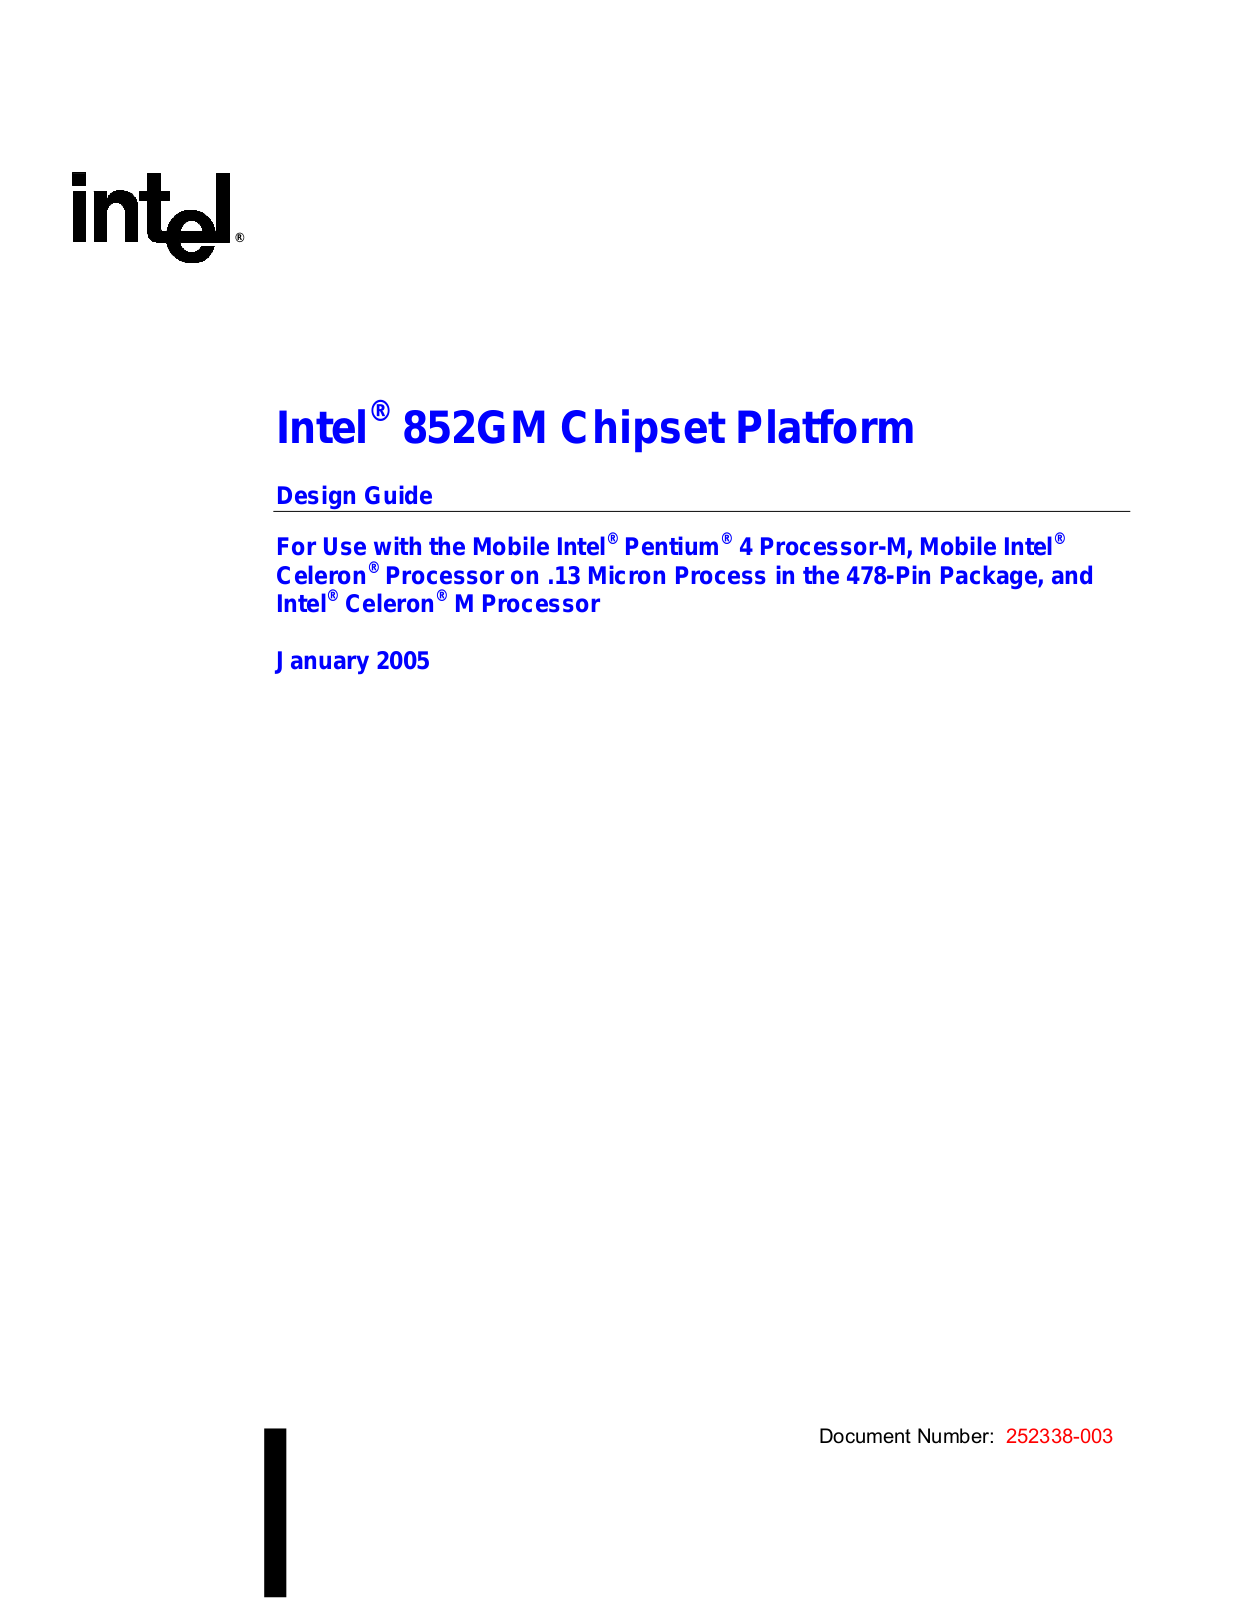 Intel 852GM Manual